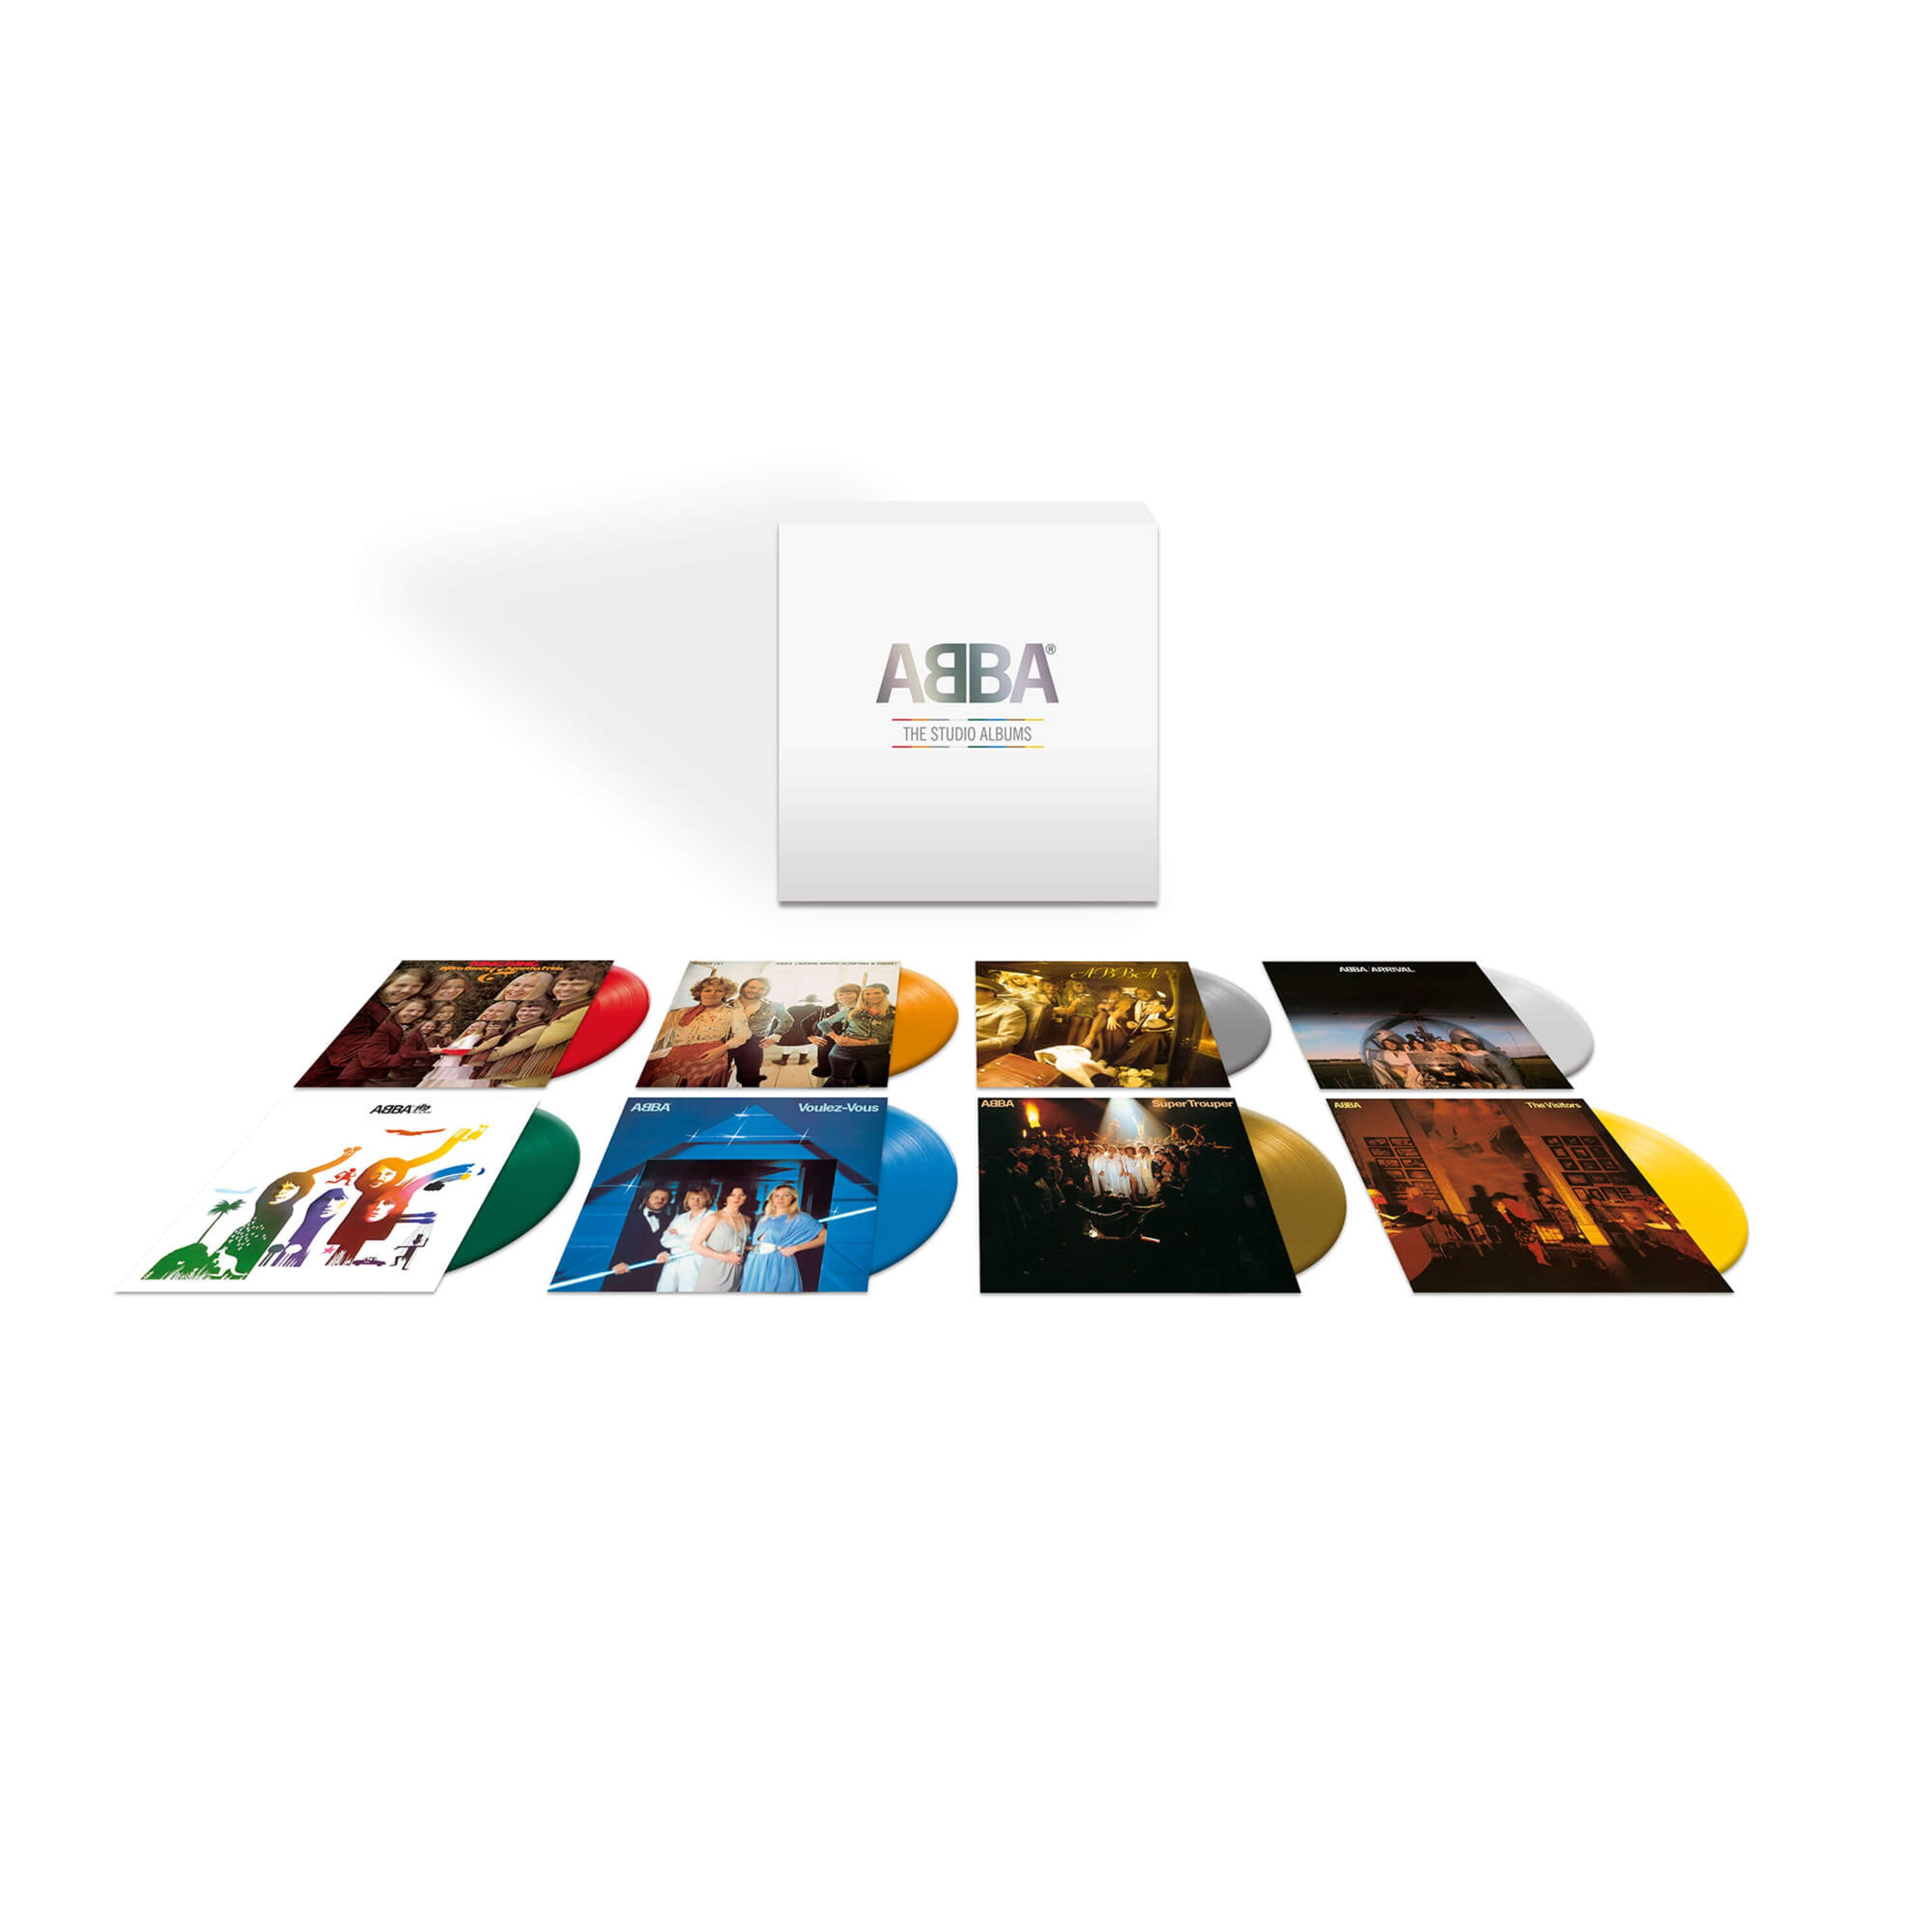 https://images.bravado.de/prod/product-assets/product-asset-data/abba/abba/products/132985/web/295330/image-thumb__295330__3000x3000_original/ABBA-The-Studio-Albums-8LP-Coloured-Vinyl-Box-Boxsets-132985-295330.jpg